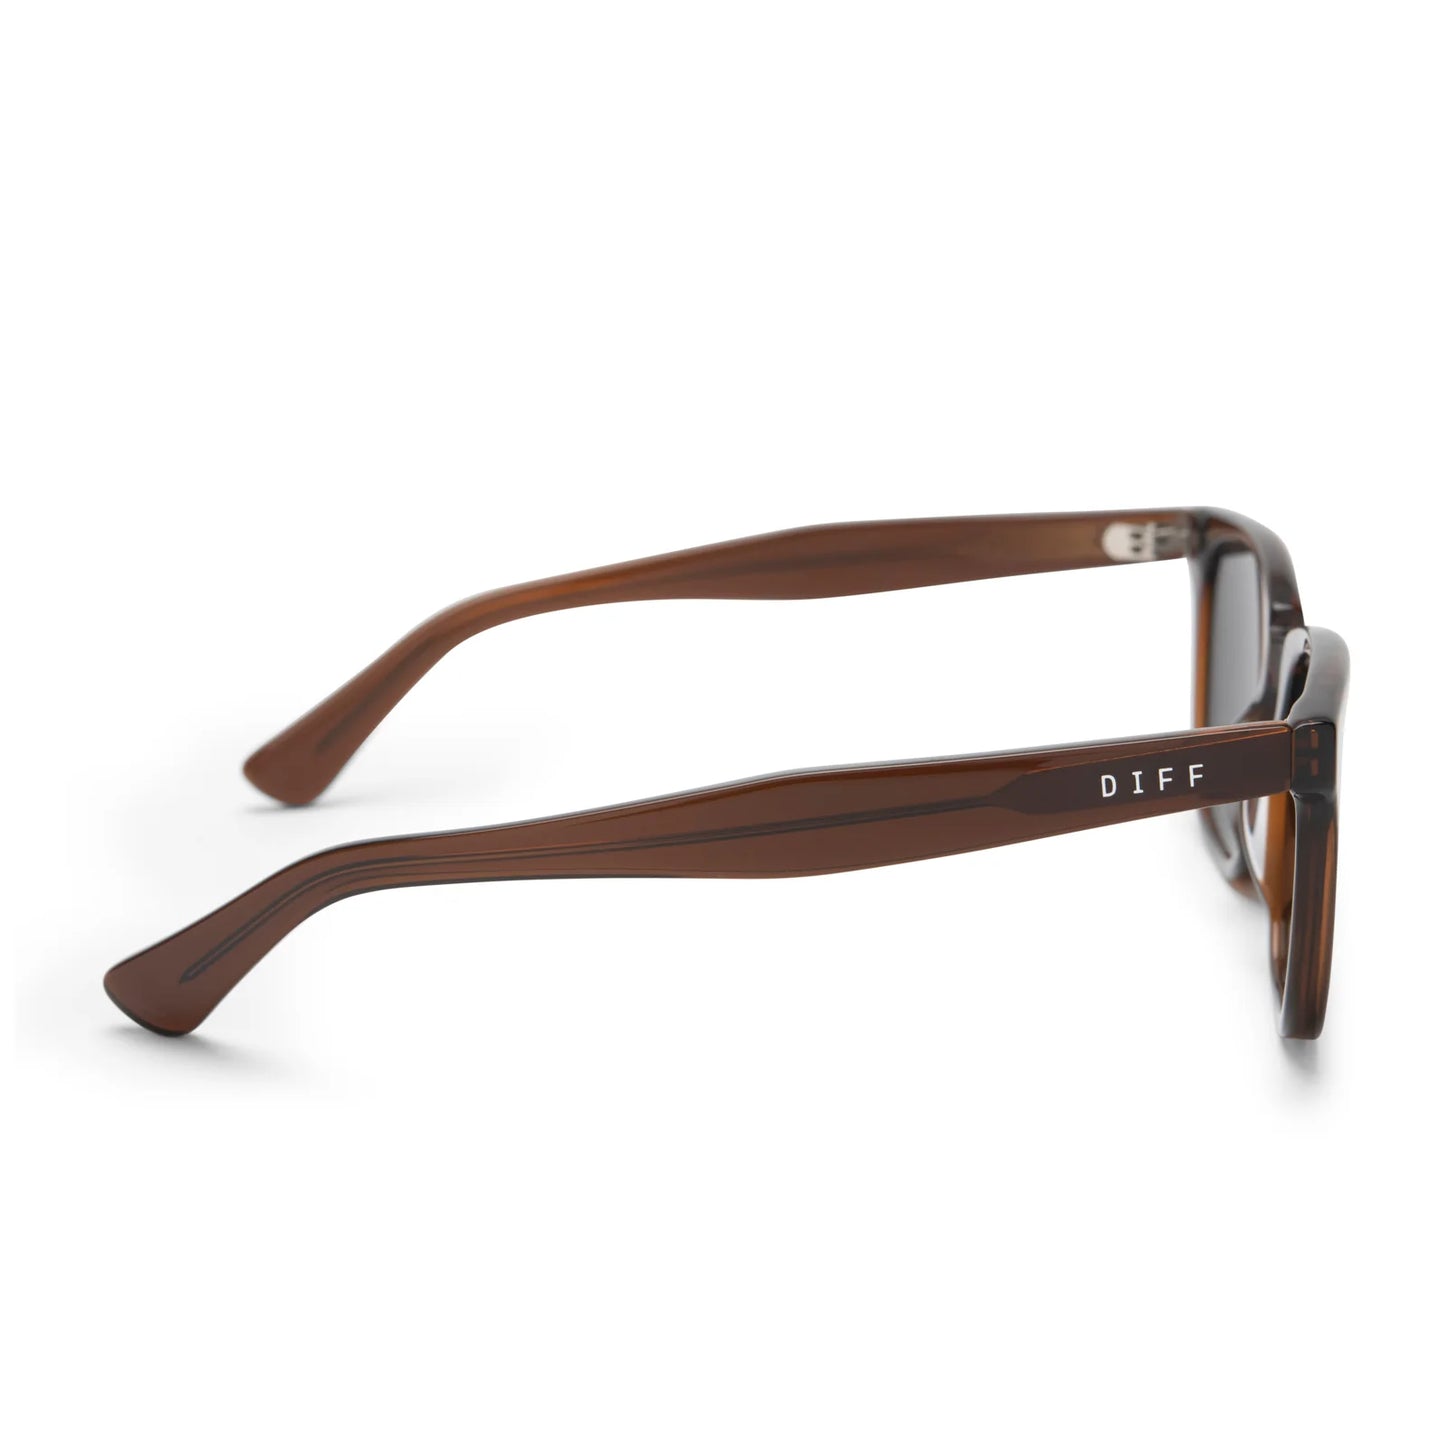 DIFF Eyewear - Colton - Whiskey Grey Polarized Sunglasses